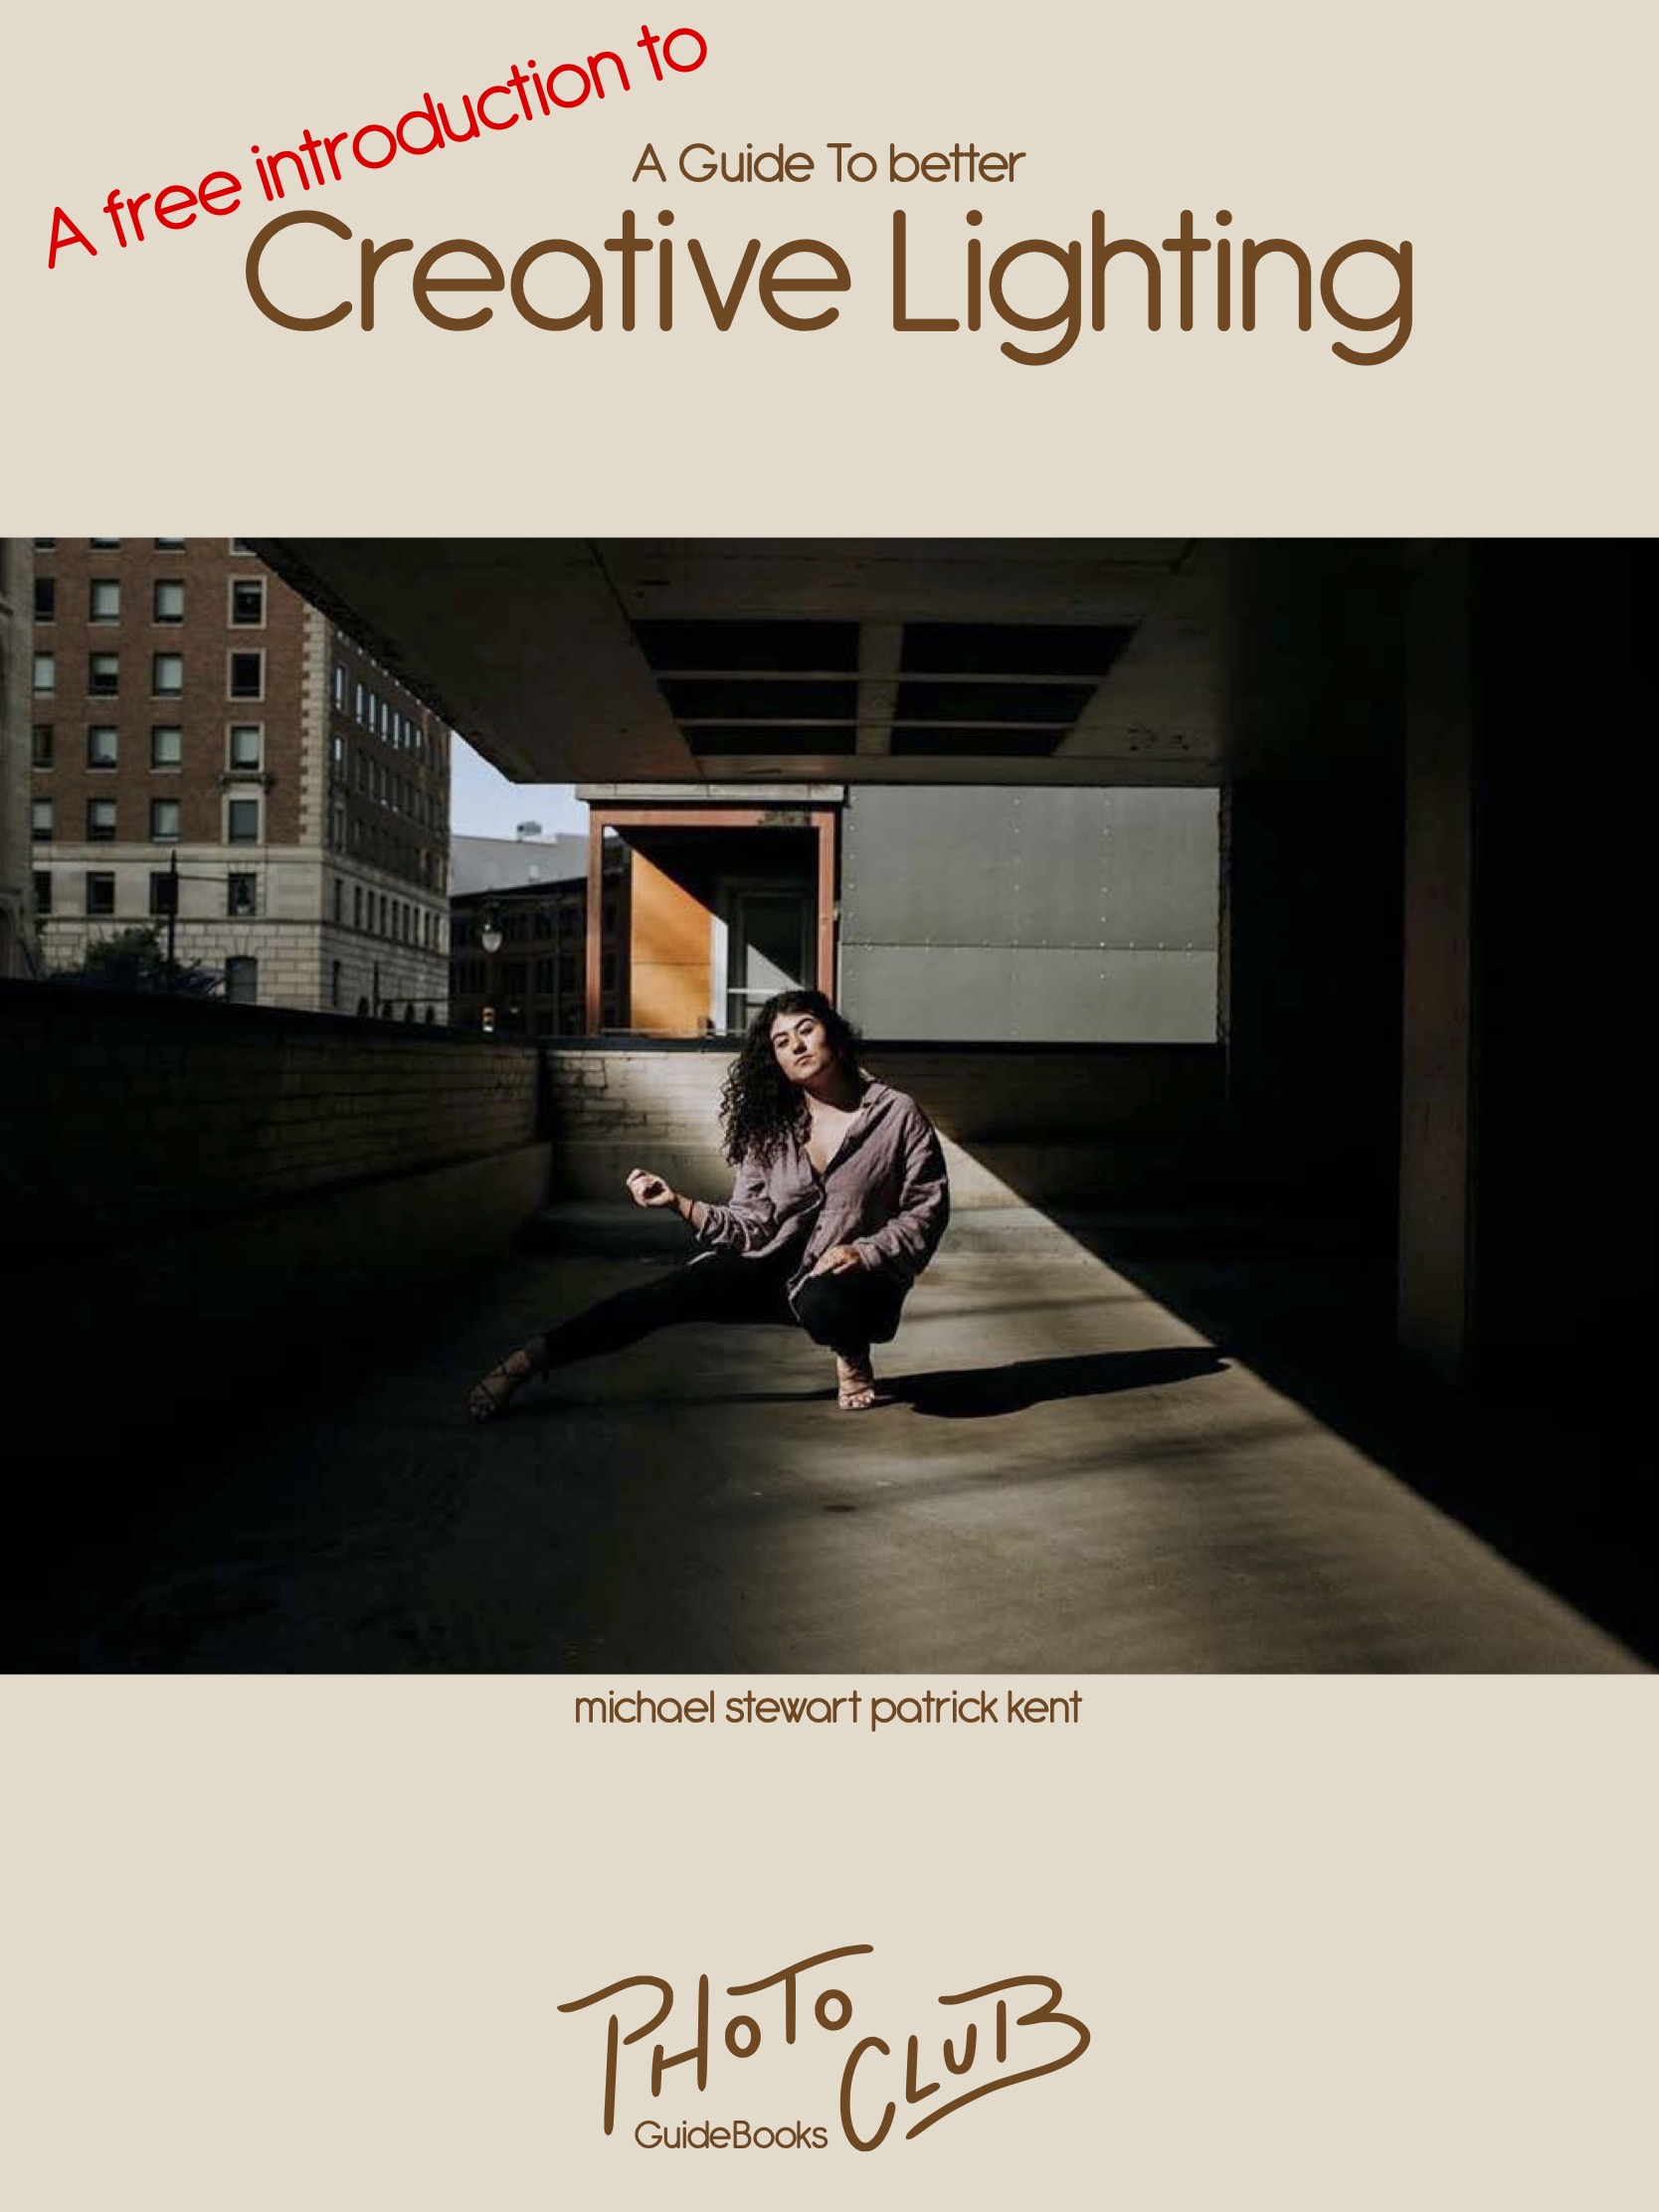 FREE creative lighting guides - Photo Club Guidebooks